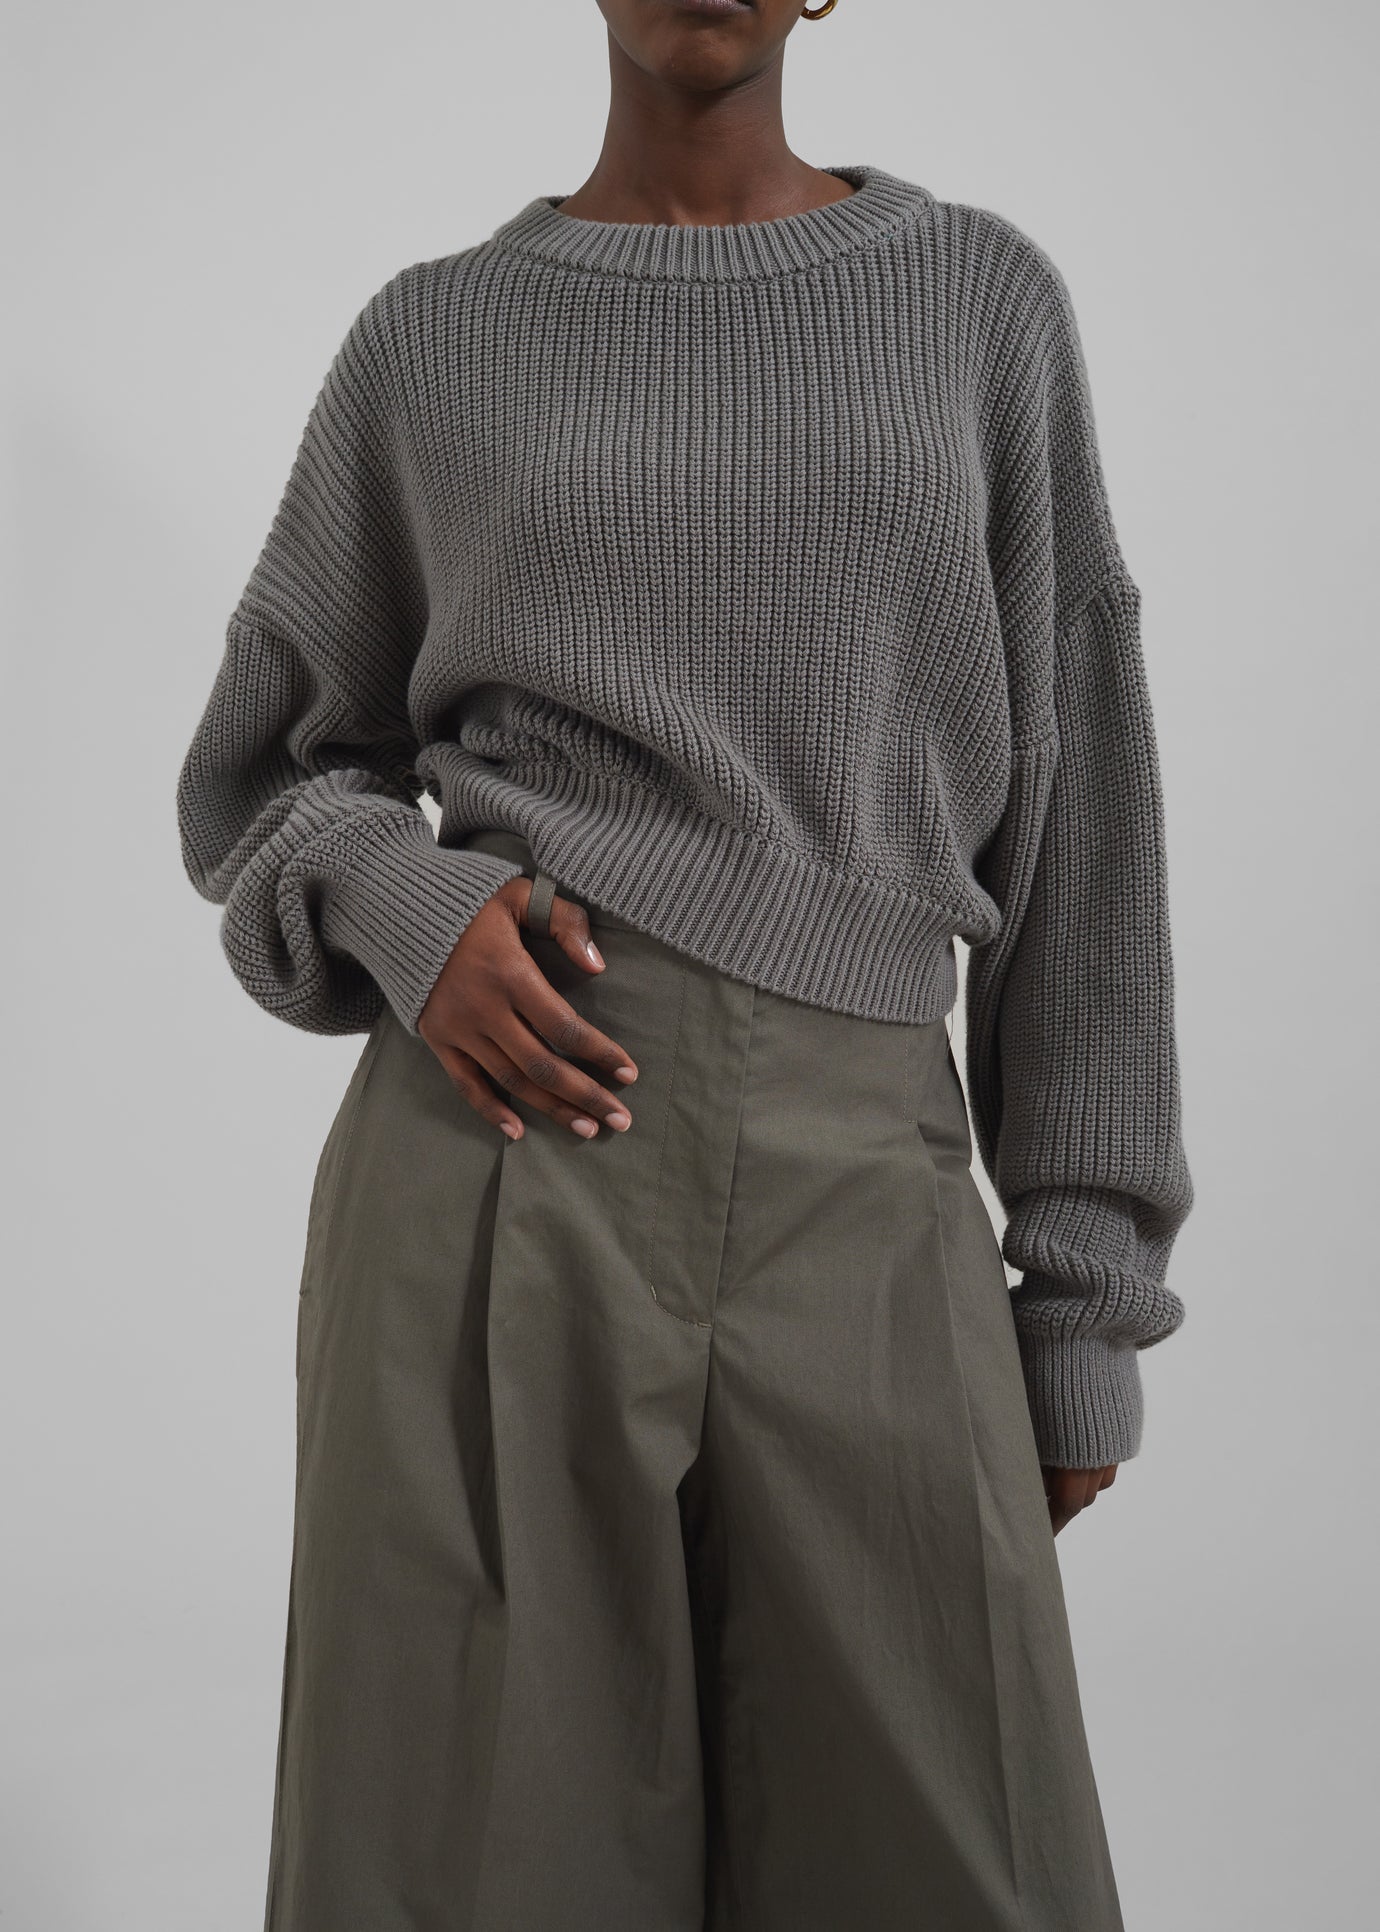 Teague Cropped Sweater - Khaki - 1